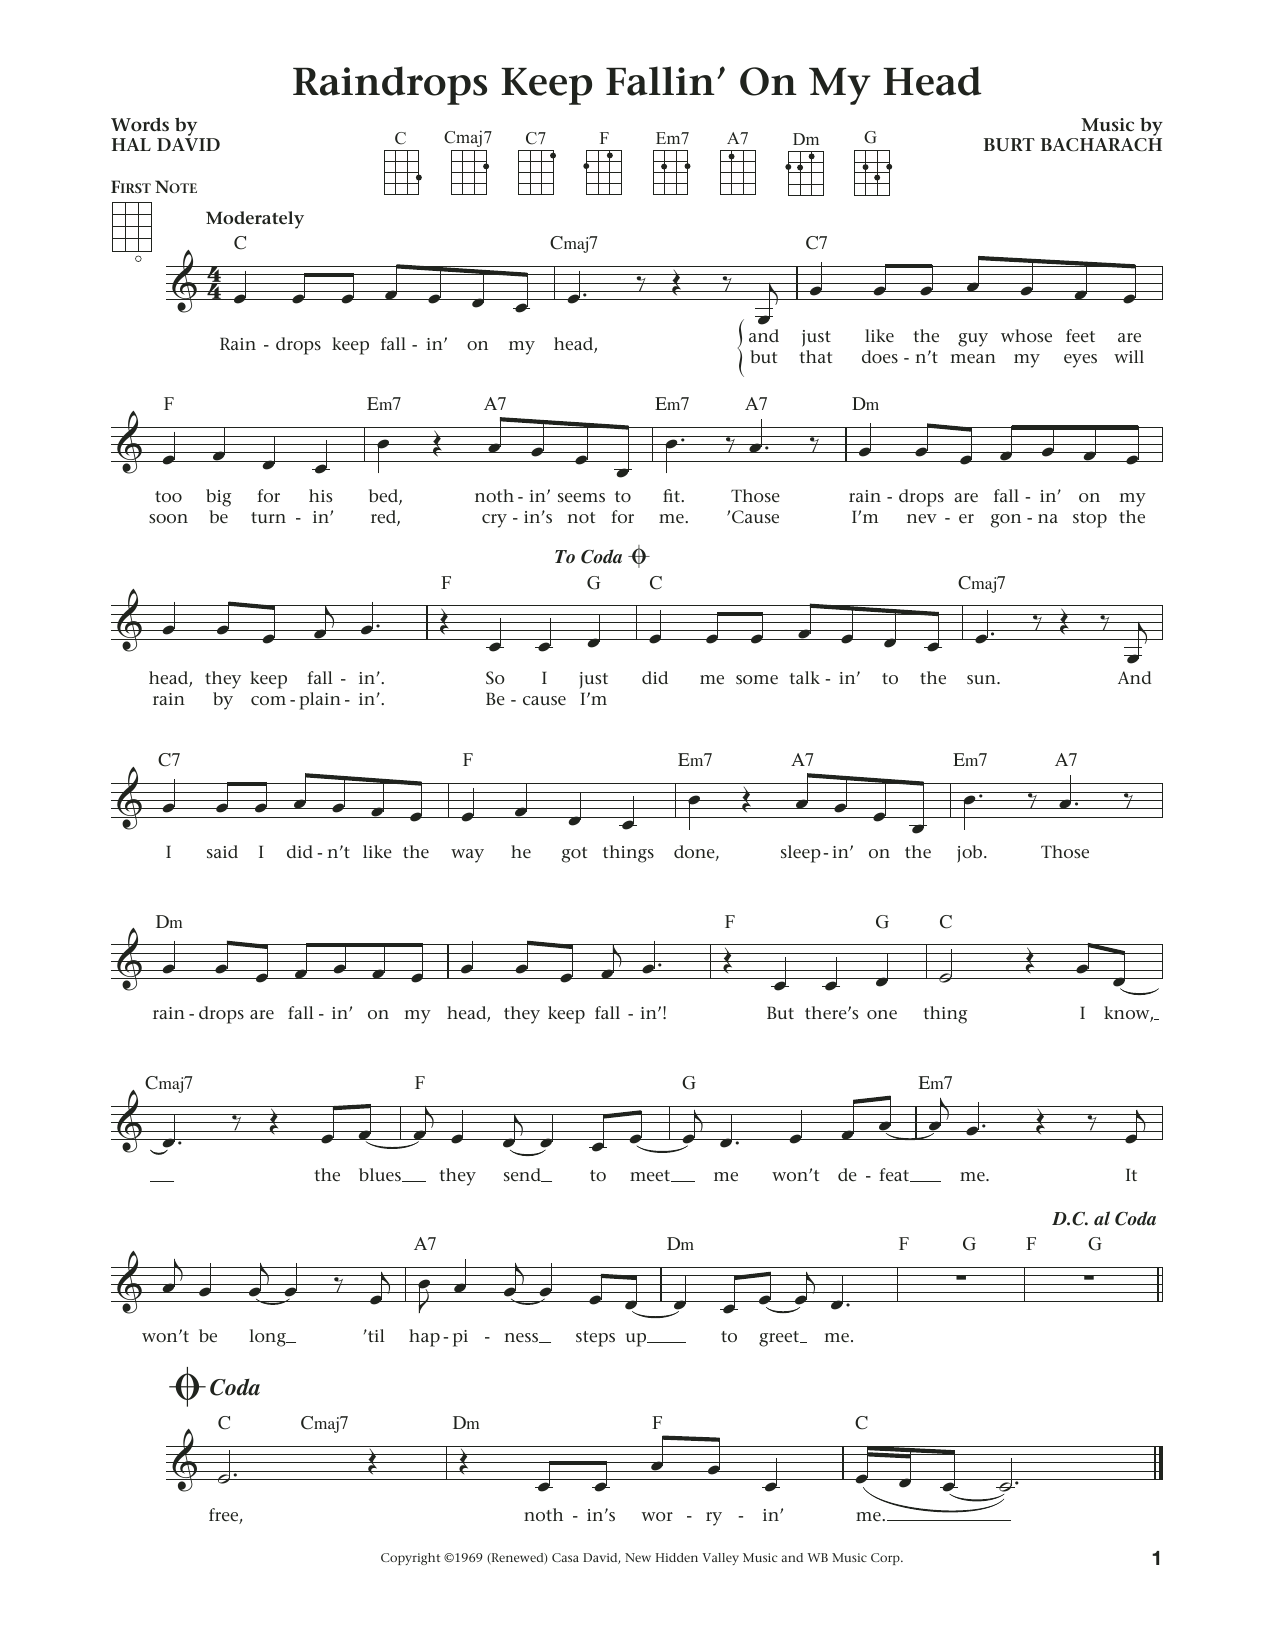 Download Burt Bacharach Raindrops Keep Fallin' On My Head Sheet Music and learn how to play Ukulele PDF digital score in minutes